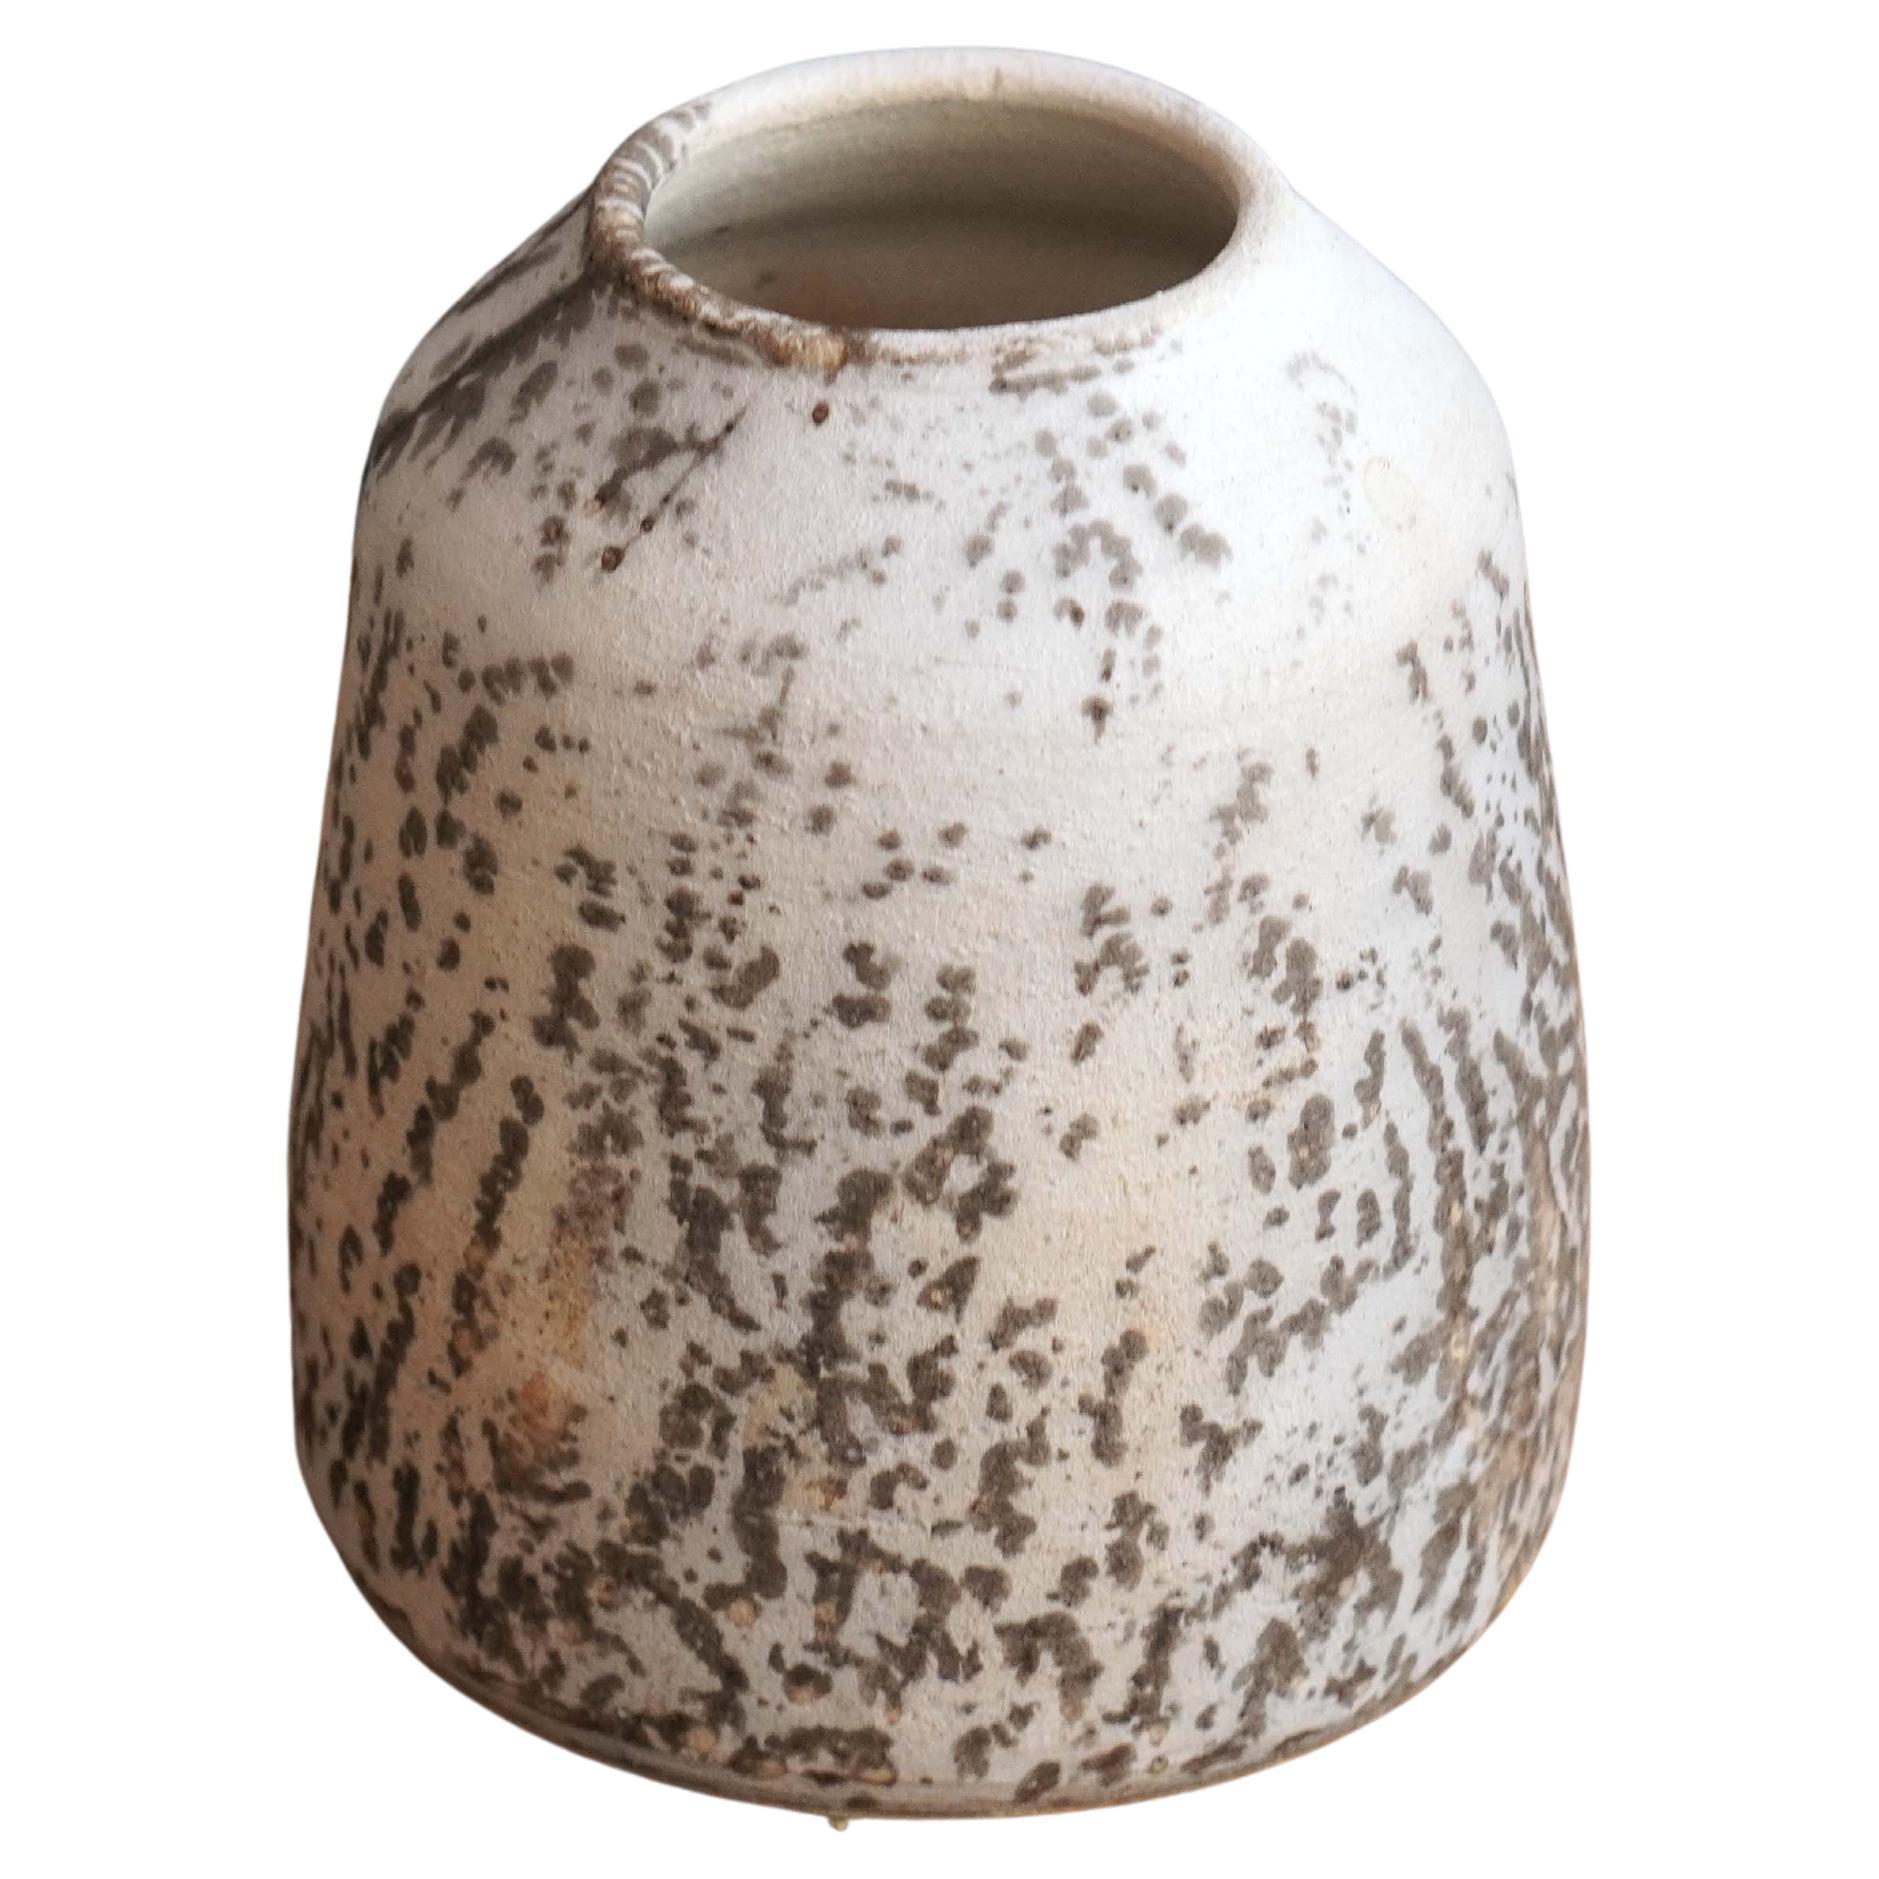 Suzu Raku Pottery Vase - Obvara - Handmade Ceramic Home Decor Gift For Sale